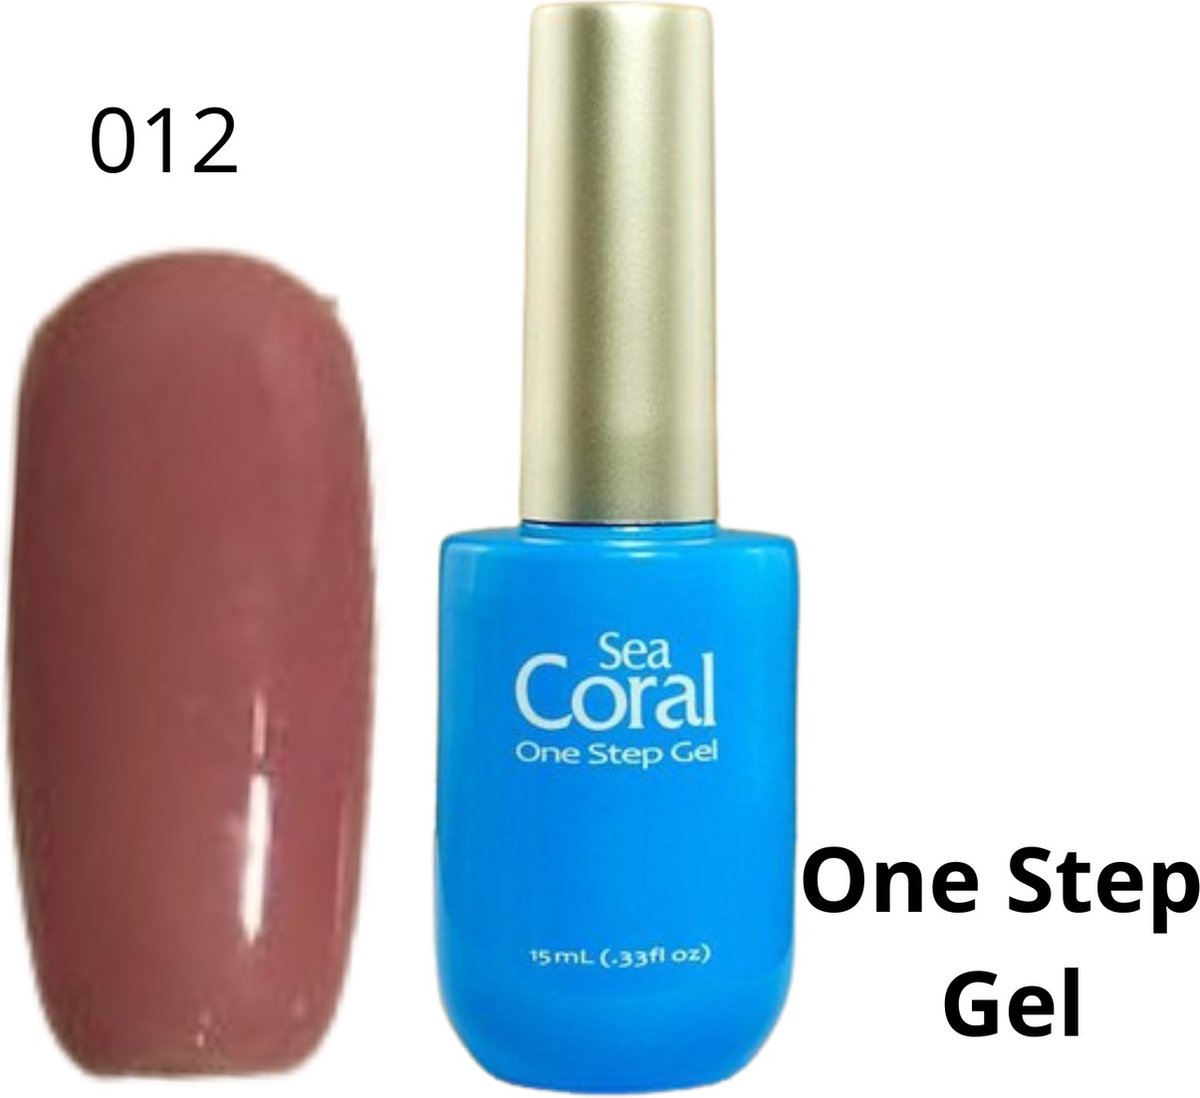 SeaCoral One Step No Wipe Gellak - Gel Nagellak - GelPolish – geen plaklaag - zónder kleeflaag, geschikt voor UV en LED – Roze 012